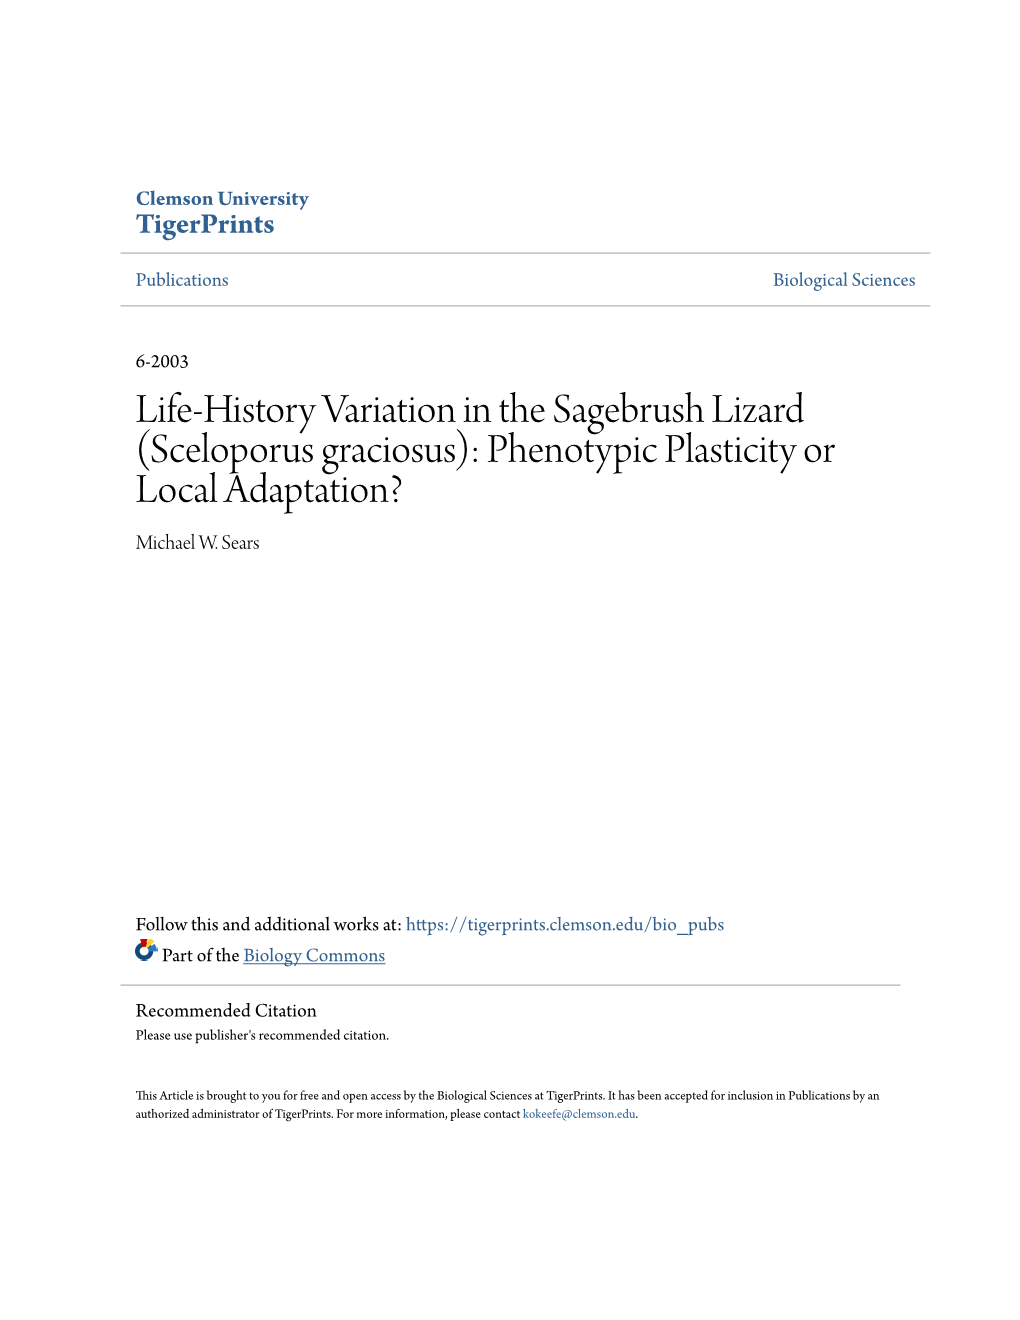 Life-History Variation in the Sagebrush Lizard (Sceloporus Graciosus): Phenotypic Plasticity Or Local Adaptation? Michael W